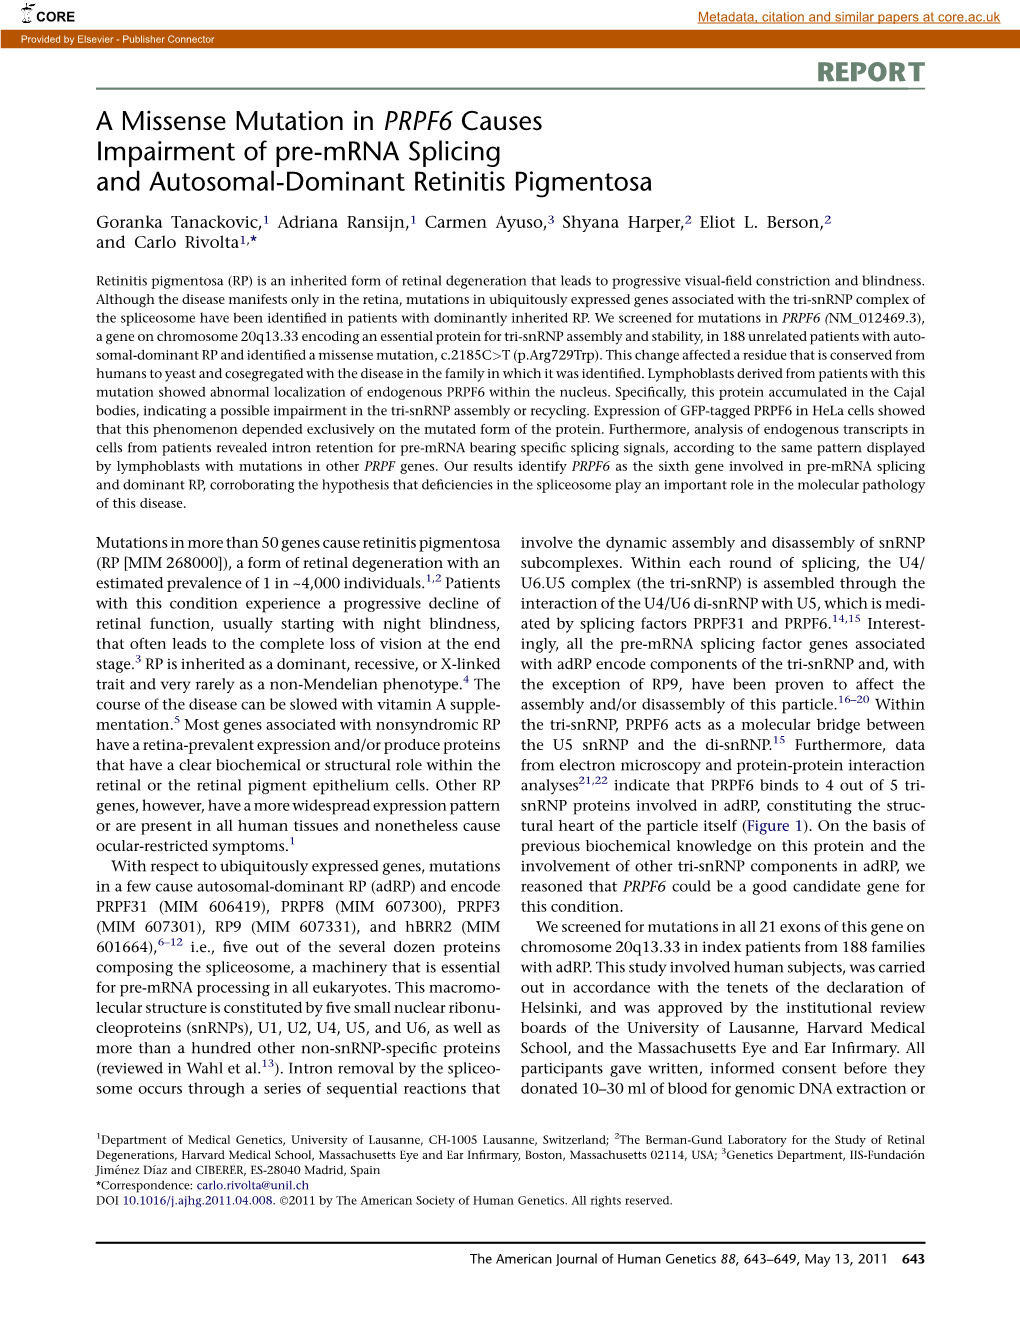 A Missense Mutation in PRPF6 Causes Impairment of Pre-Mrna Splicing and Autosomal-Dominant Retinitis Pigmentosa